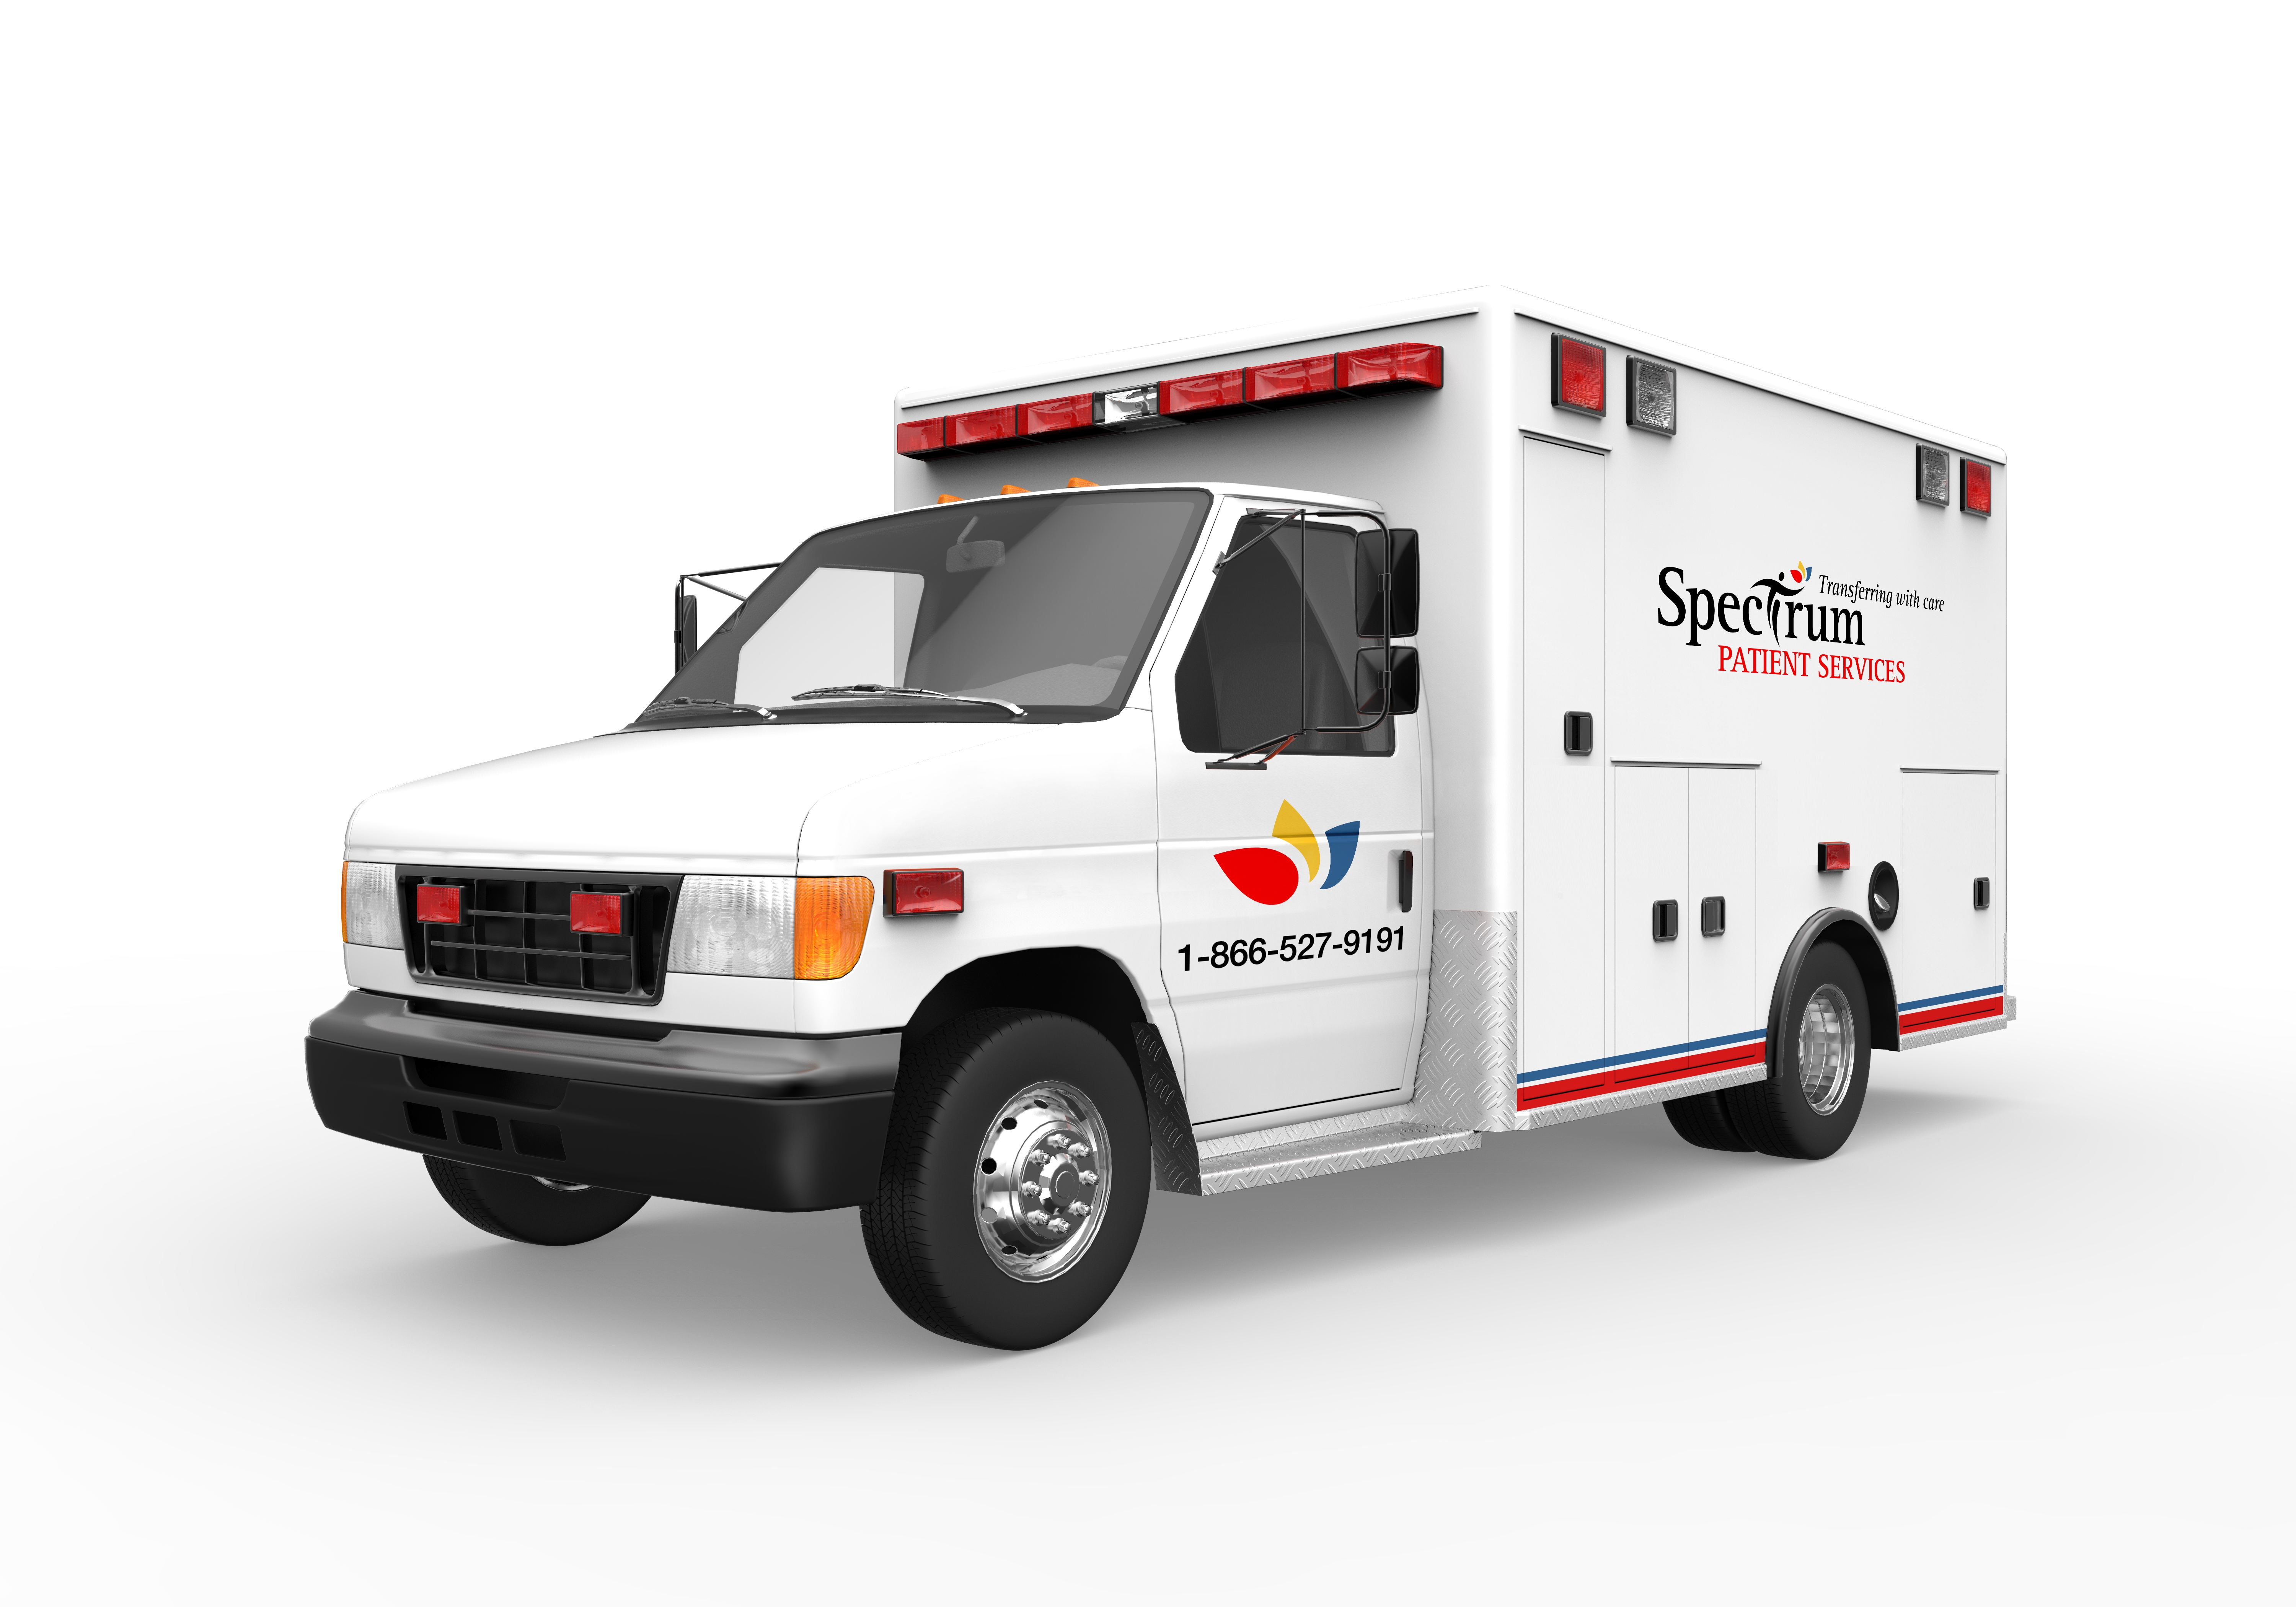 Image: Press Release: Spectrum Patient Services acquires Medical Transportation Services